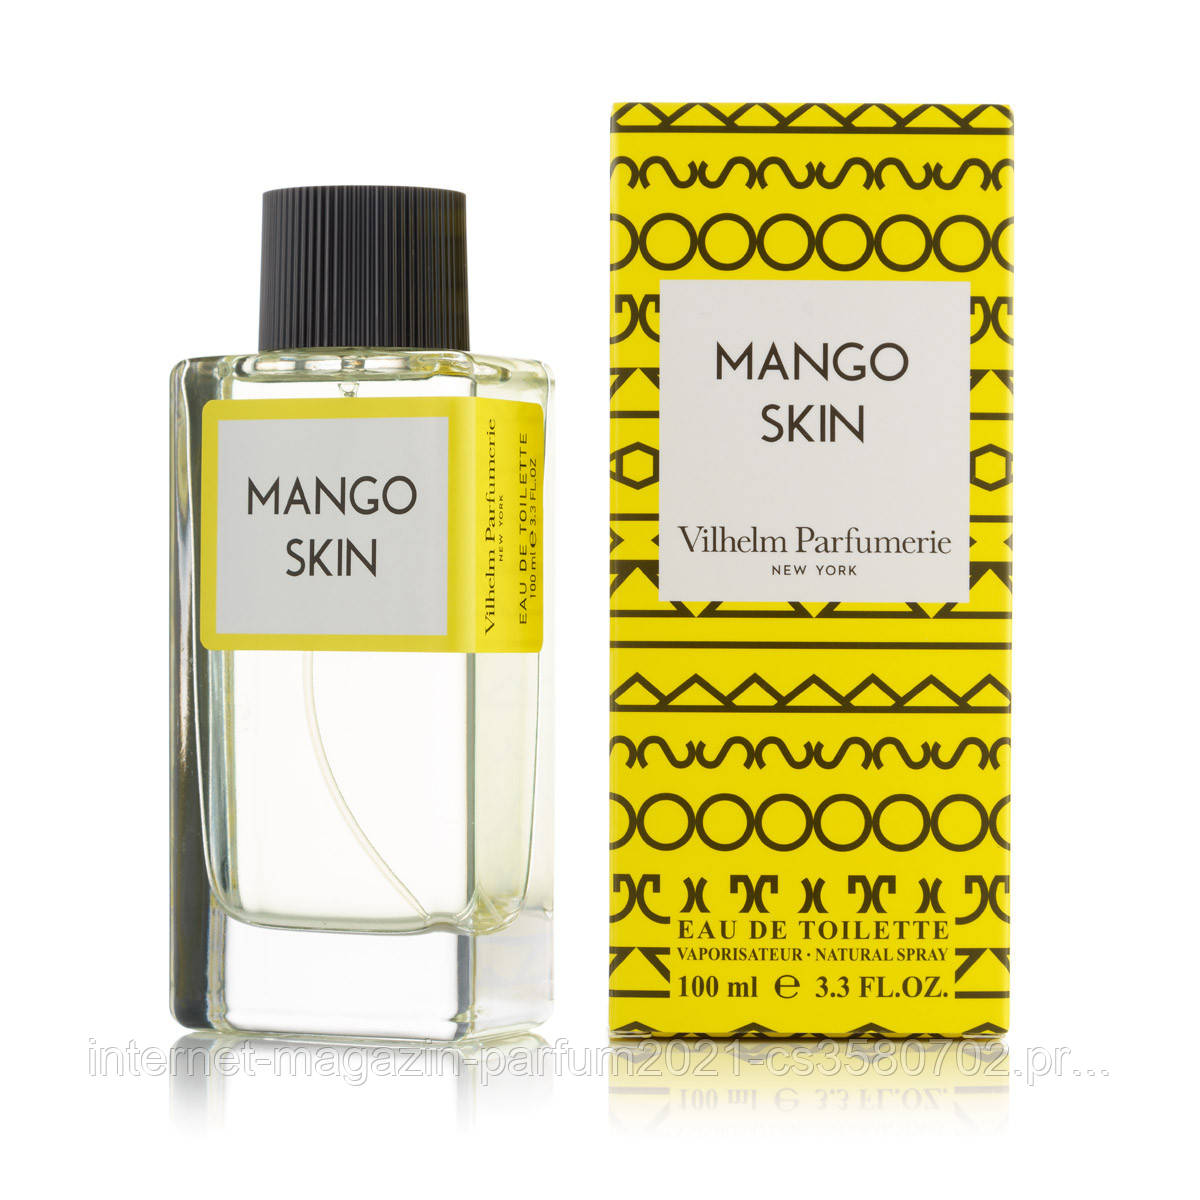 Mango skin vilhelm цена. Туалетная вода Mango Skin. Парфюм Wilhelm Parfumerie. Wilhelm Parfumerie Mango Skin 100 мл.